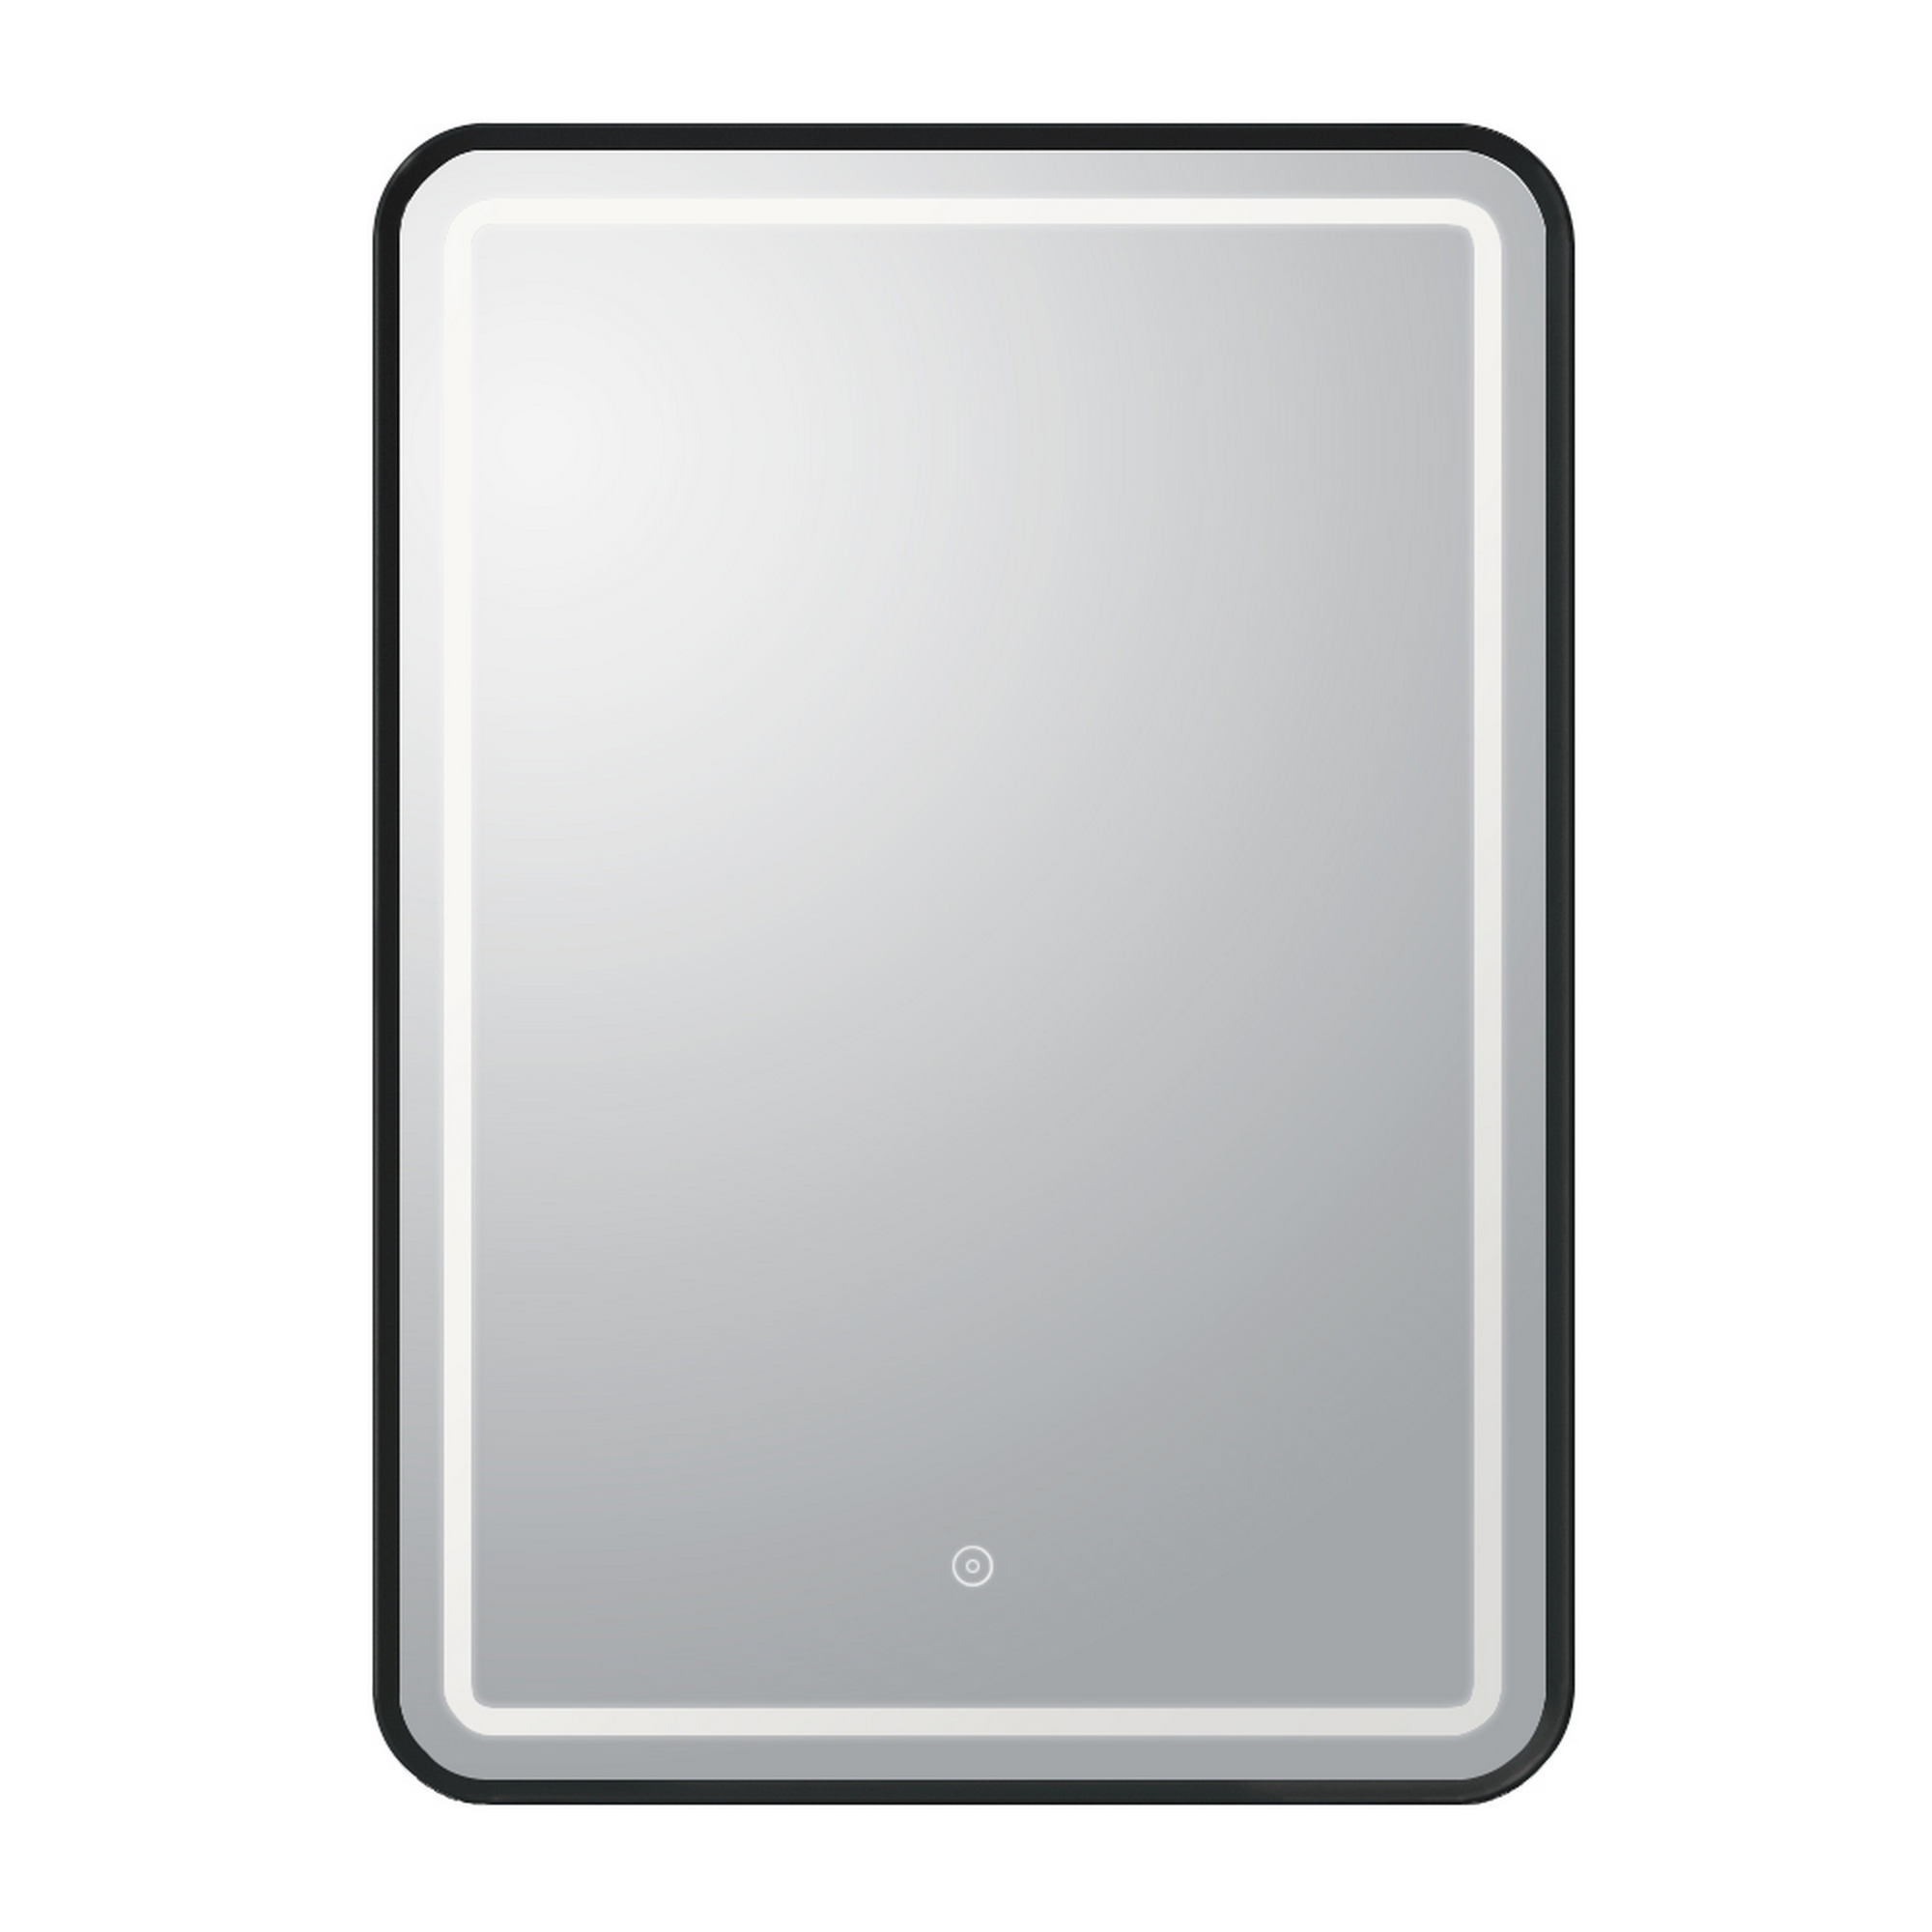 LED-Spiegel 'Nakia' matt schwarz 50 x 70 cm, mit Touch Sensor 1400 lm + product picture